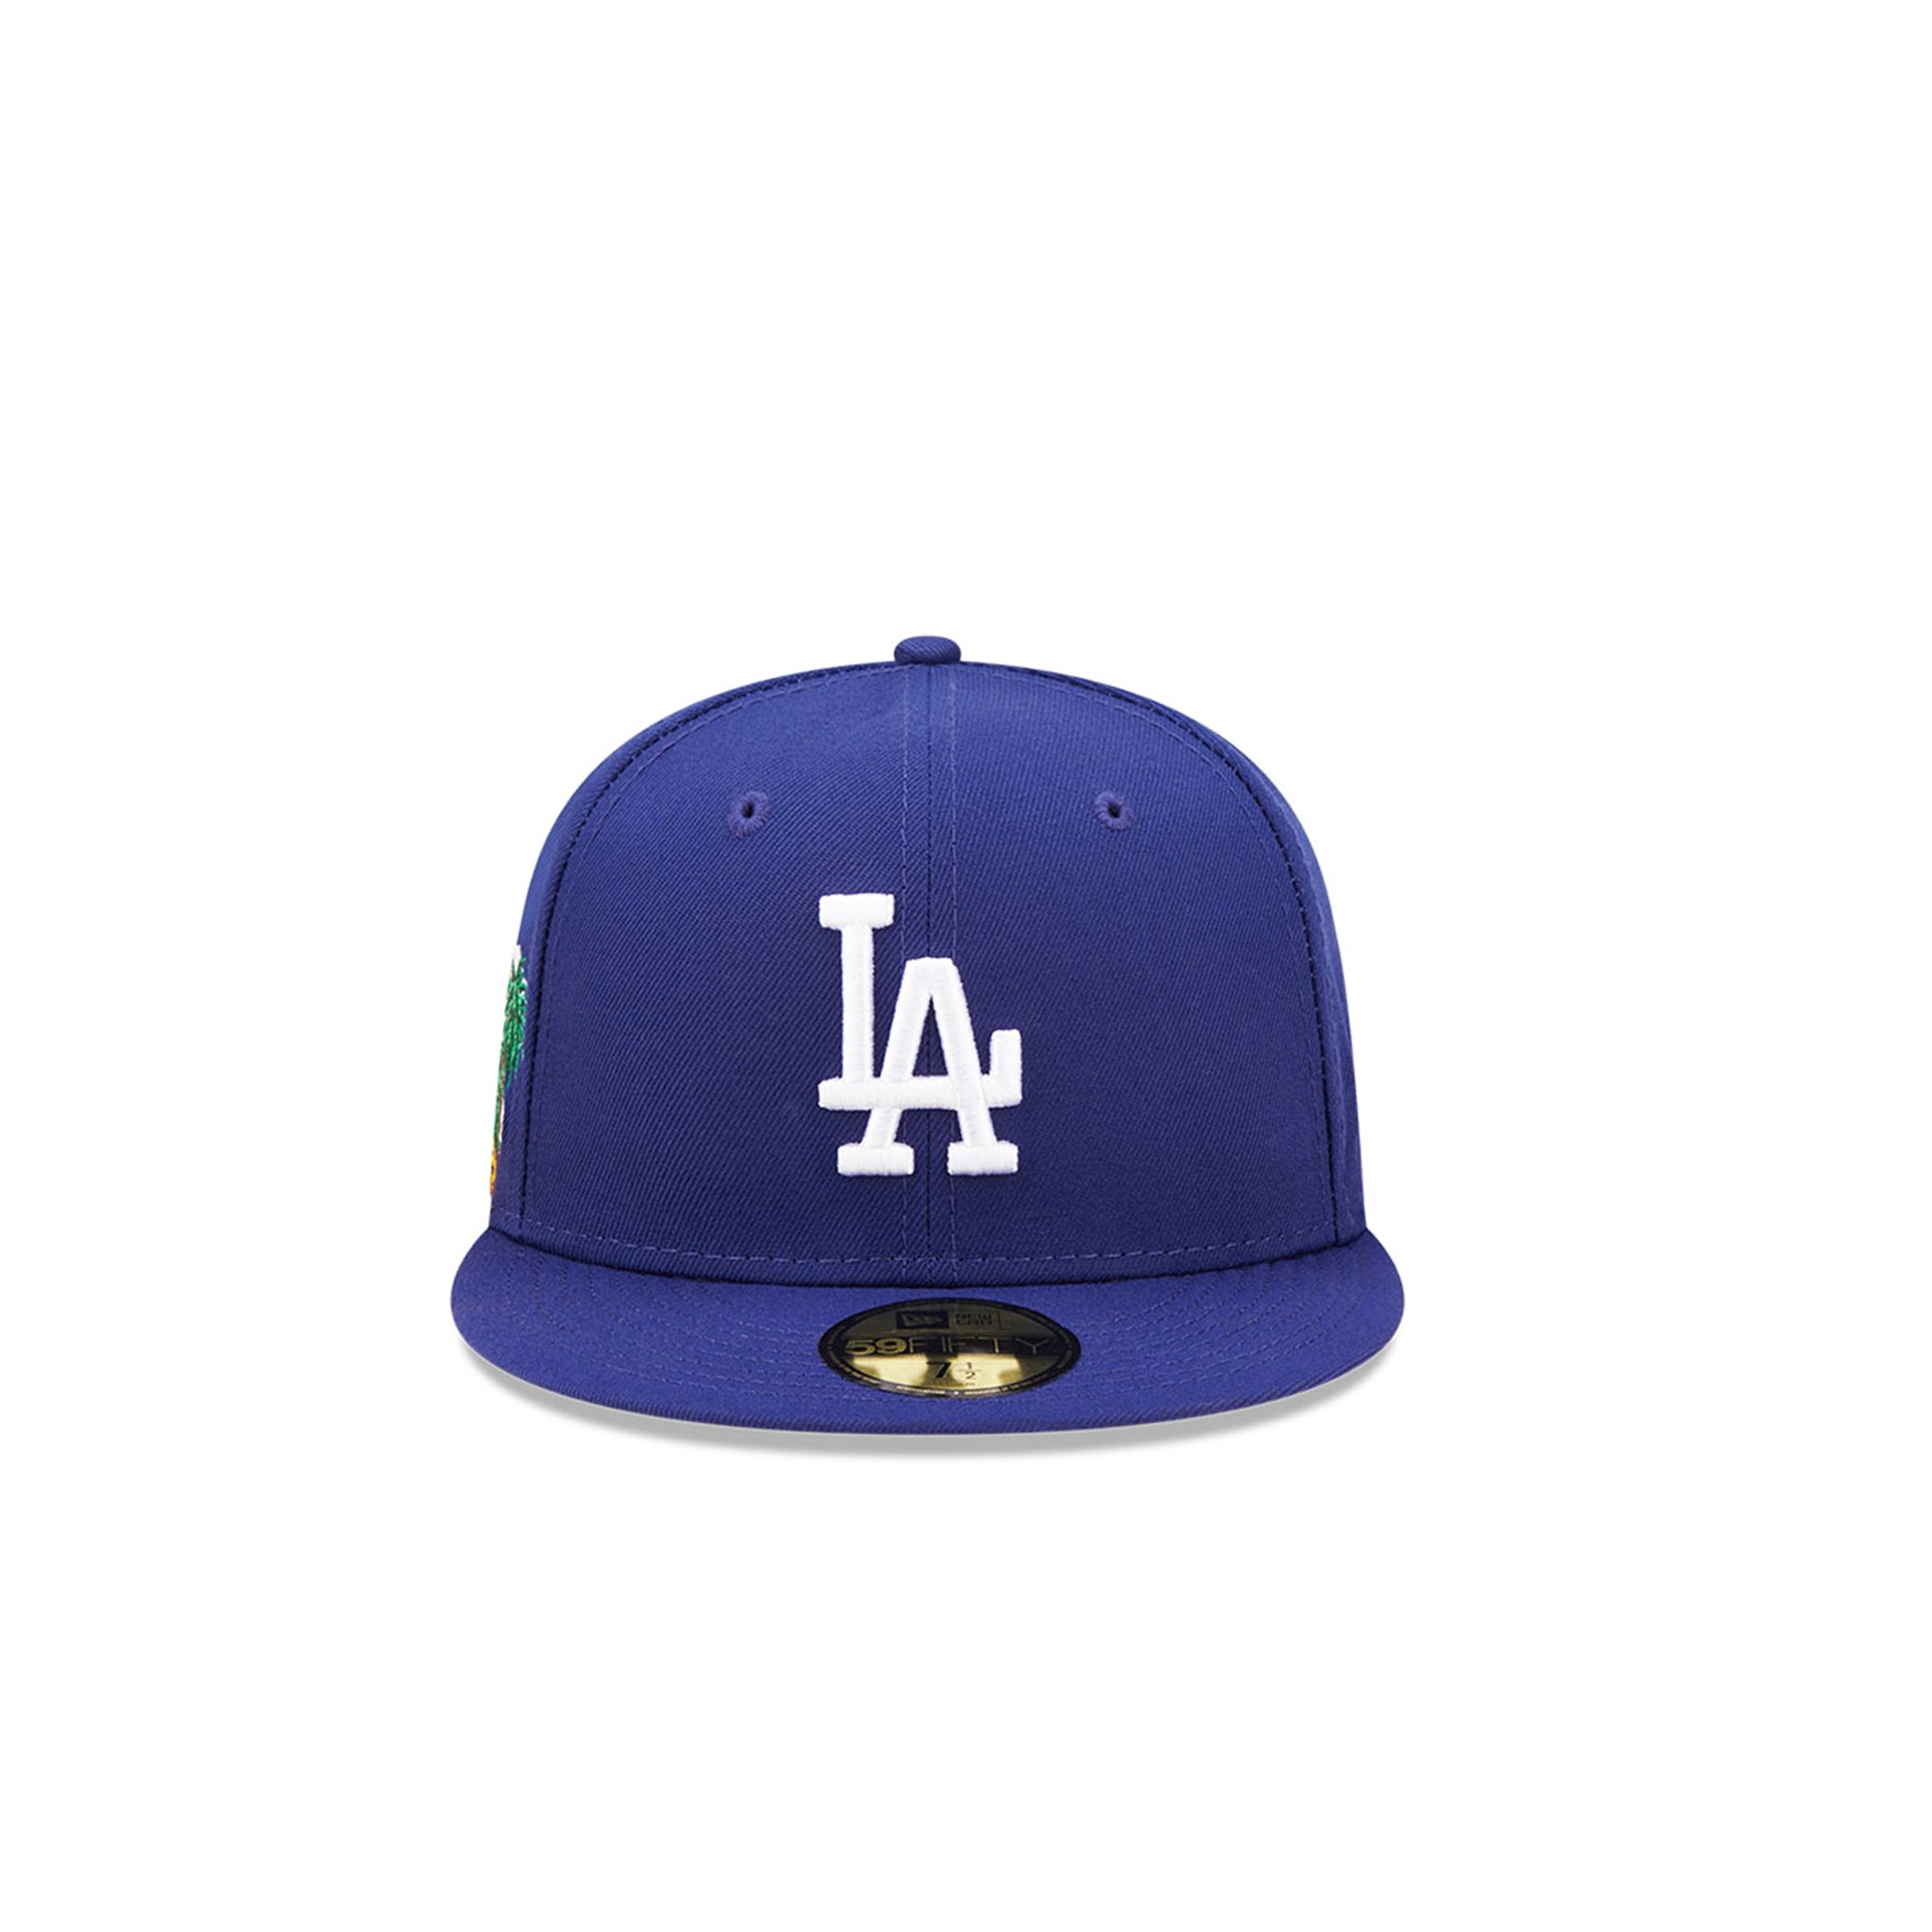 New Era LA Dodgers 59Fifty Fitted Cap Blue